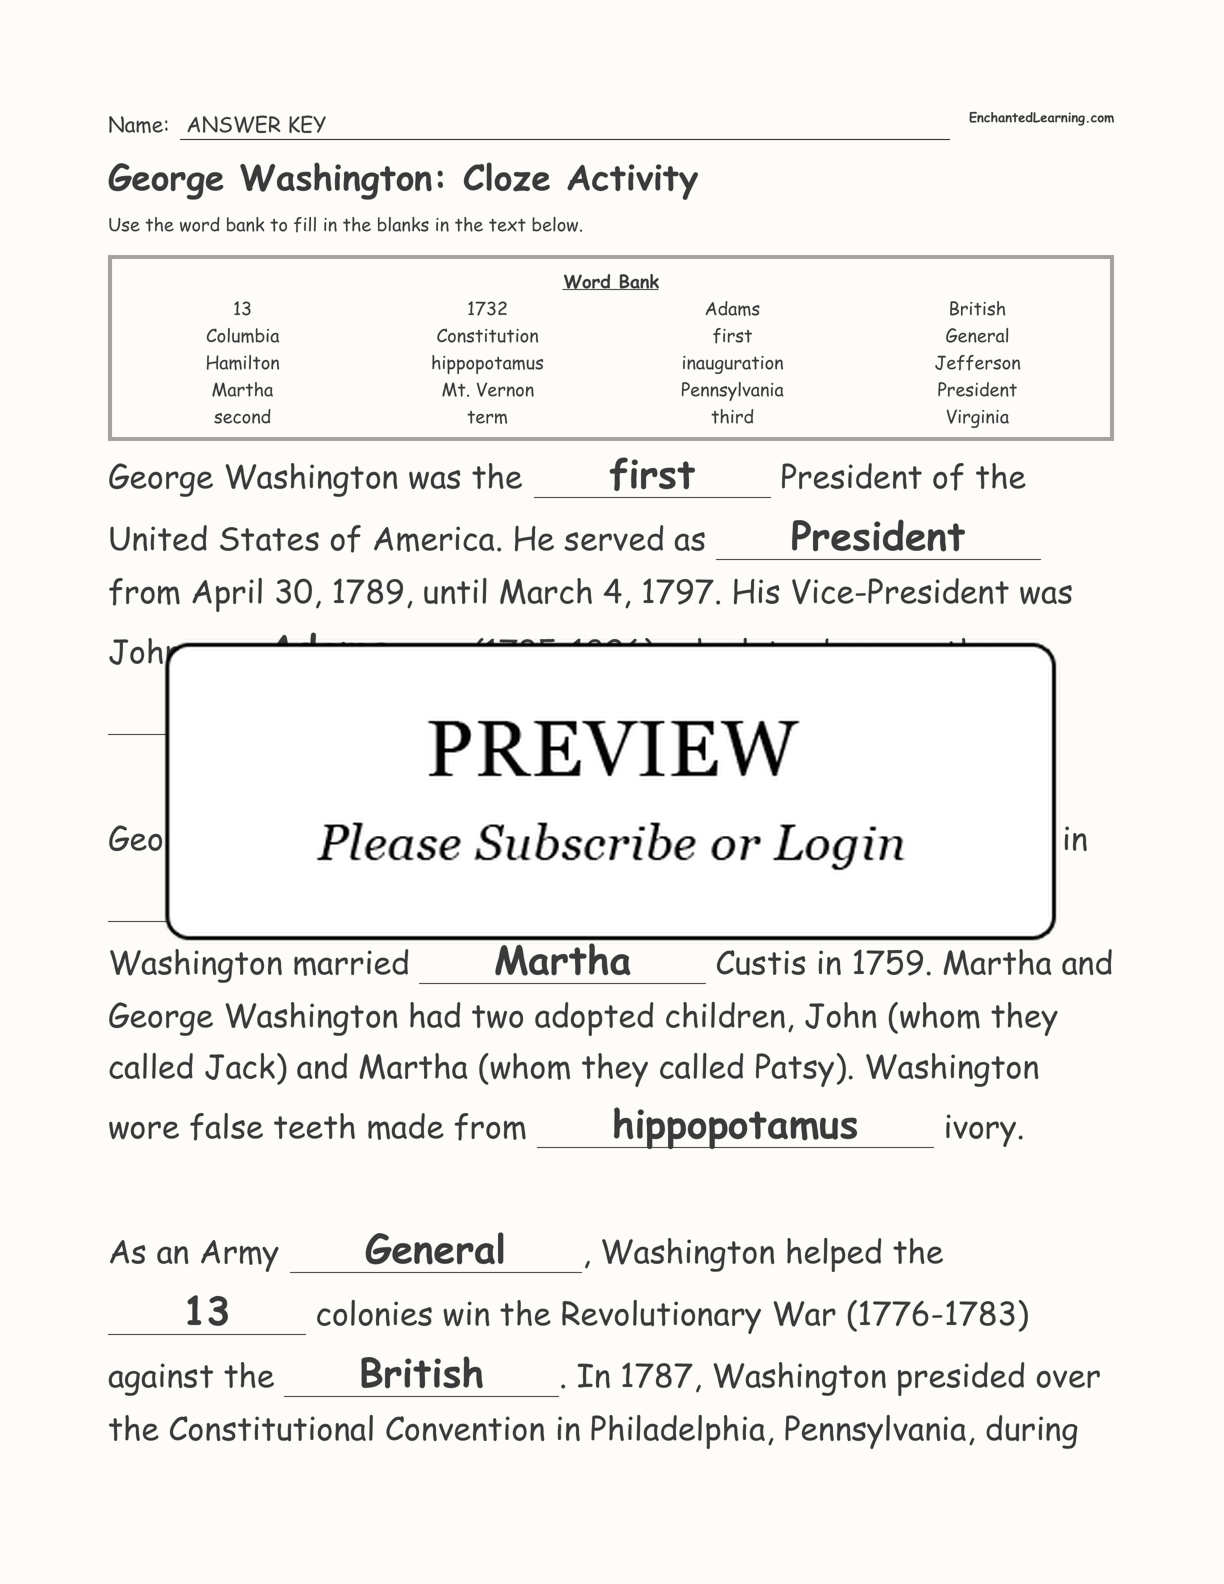 George Washington: Cloze Activity interactive worksheet page 3